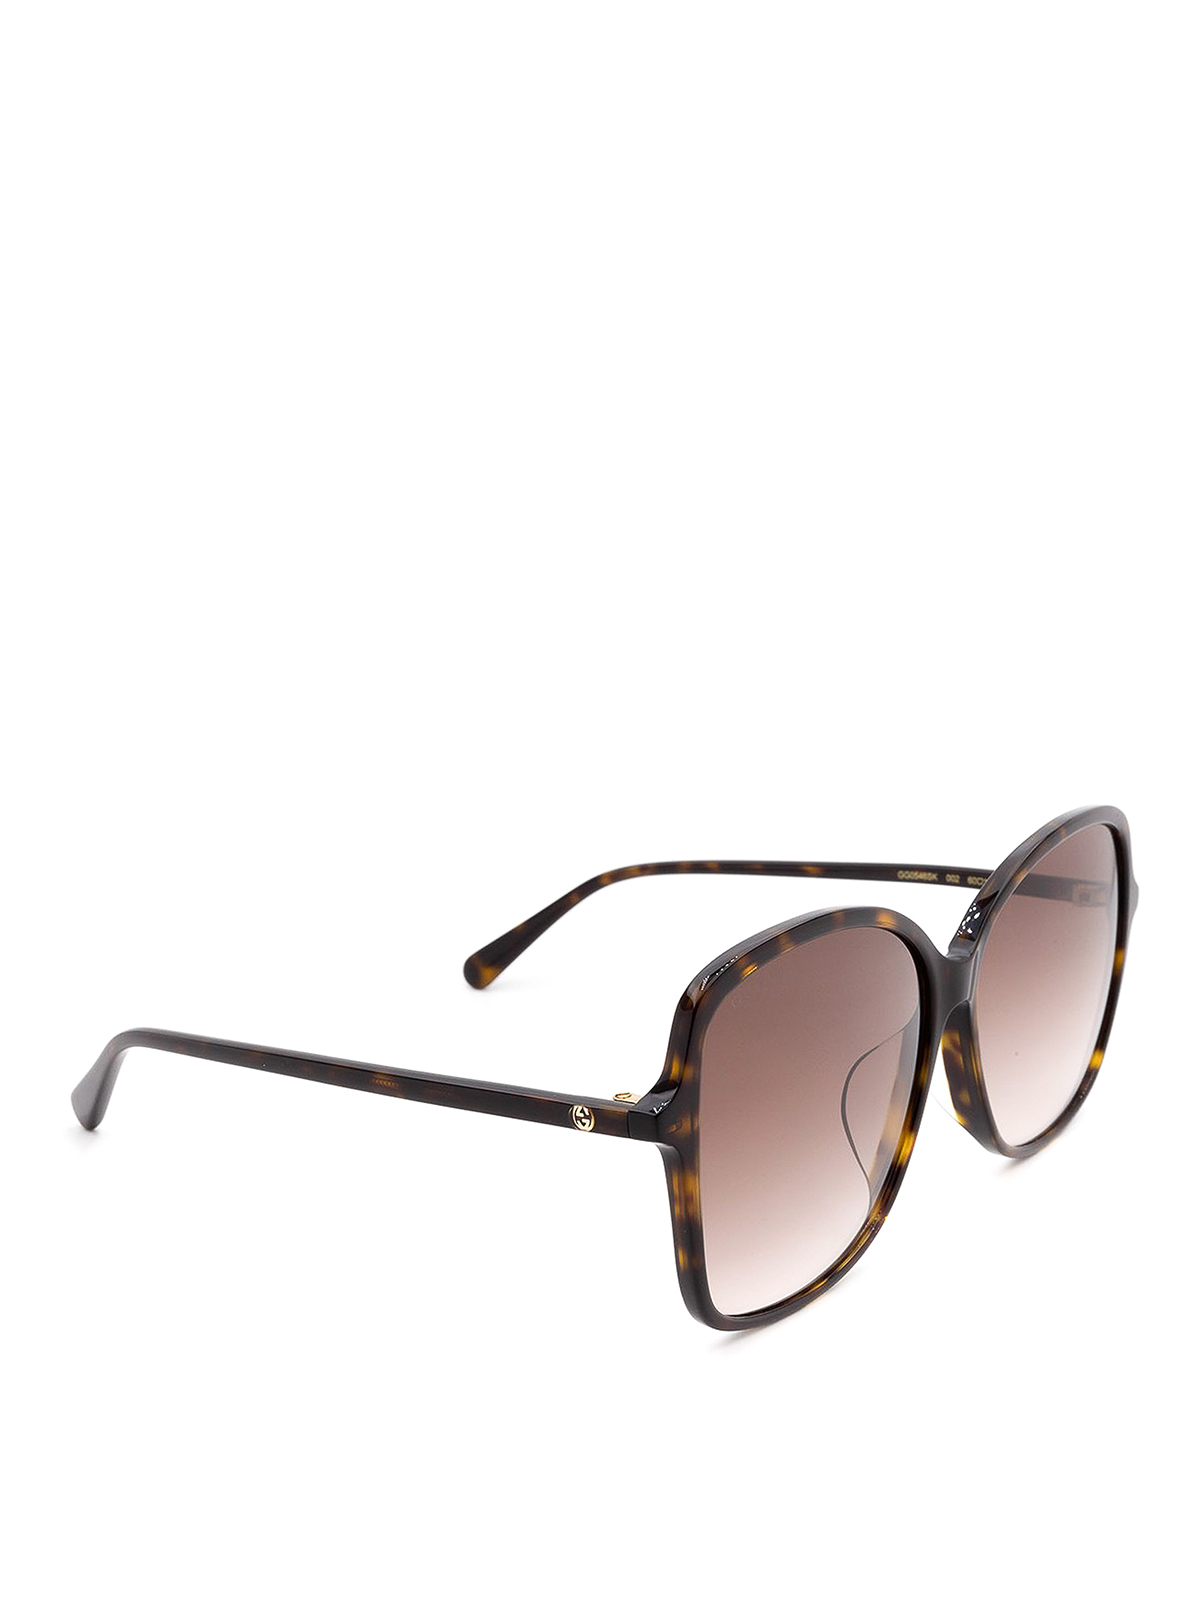 Gucci Tortoise Sunglasses In Brown